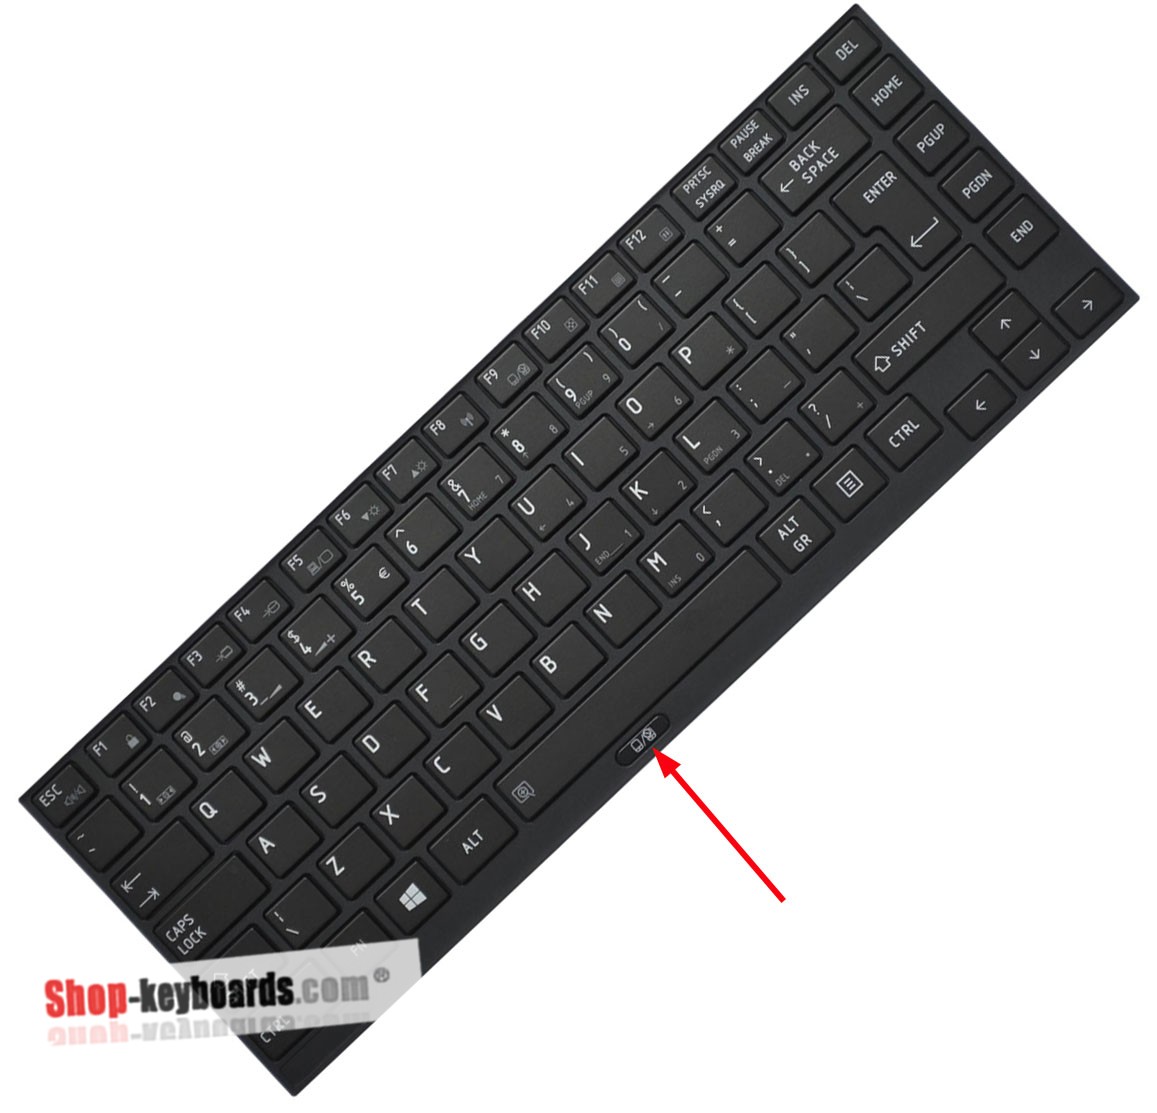 Toshiba Portege R700 Keyboard replacement